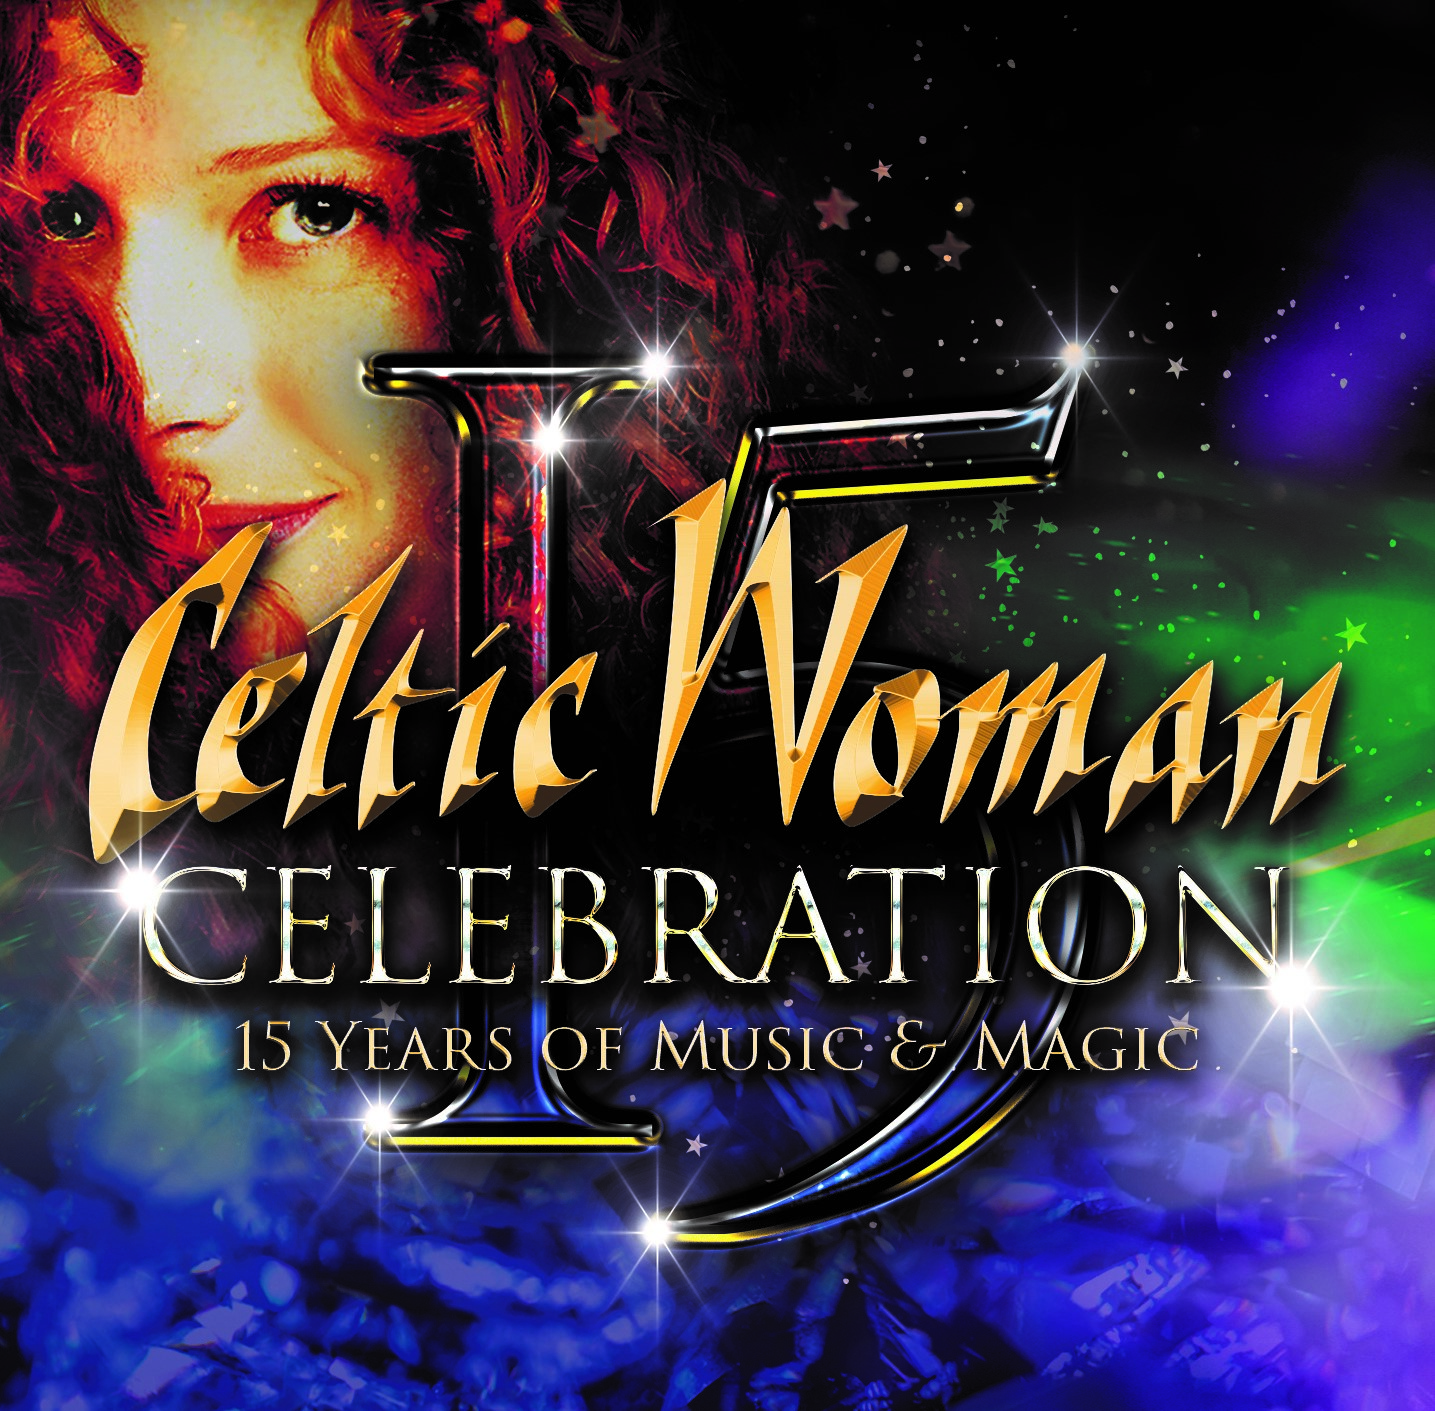 Celtic Woman Release Celebration 15 Years Of Music Magic Boston Irish